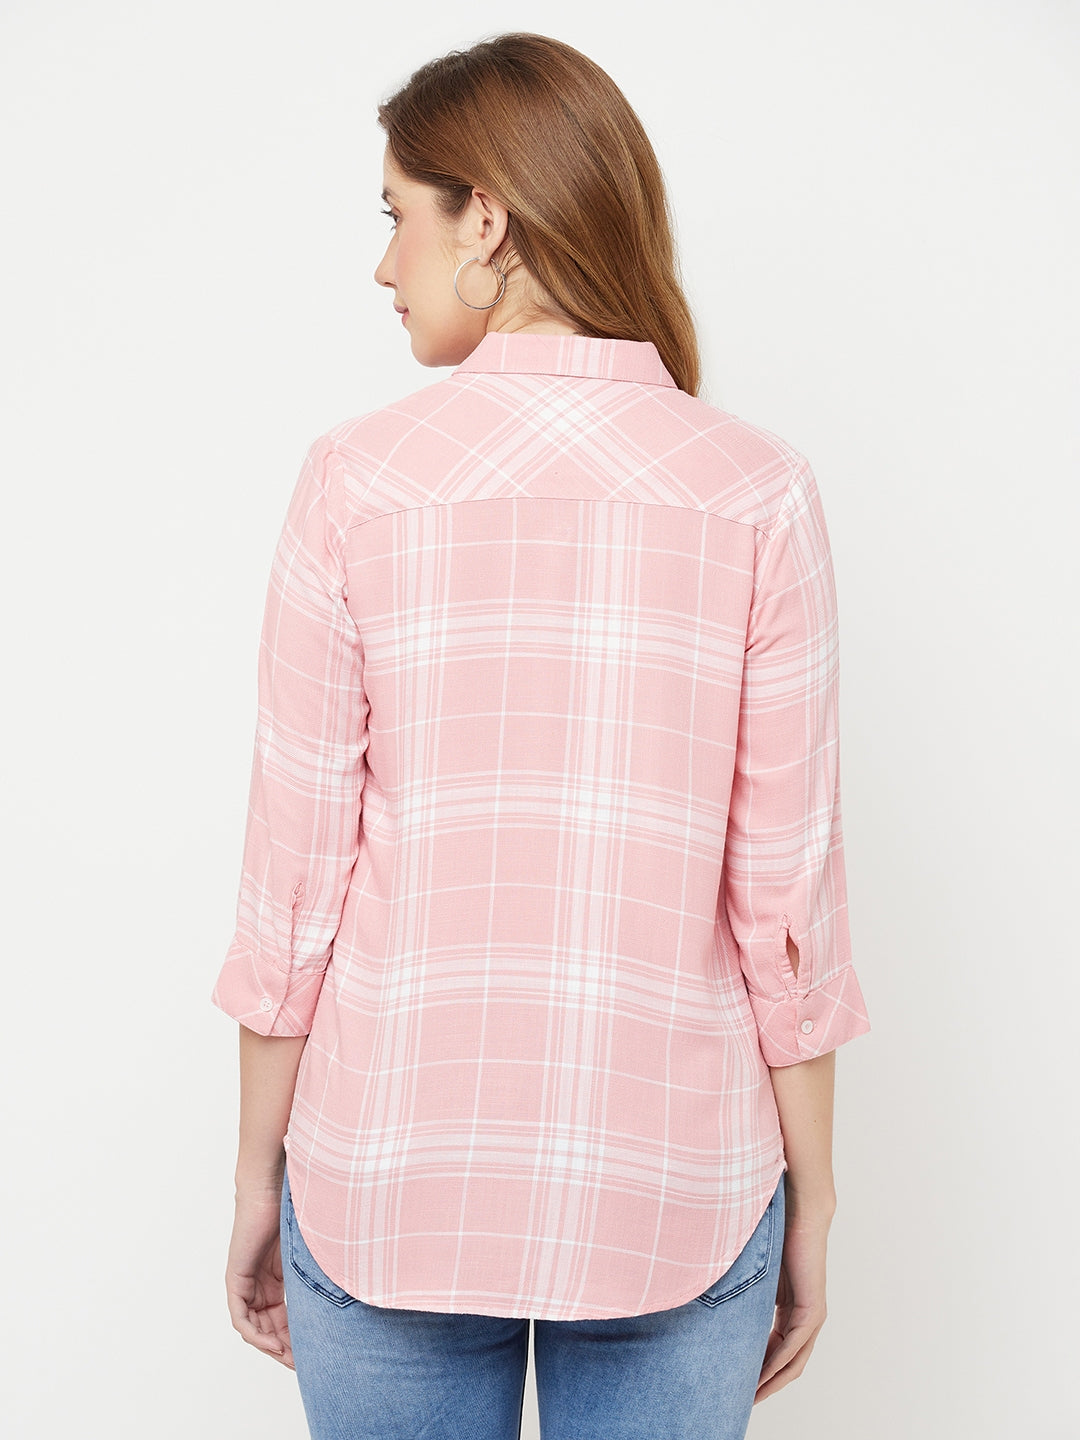 Pink Checked Casual Shirt - Women Shirts